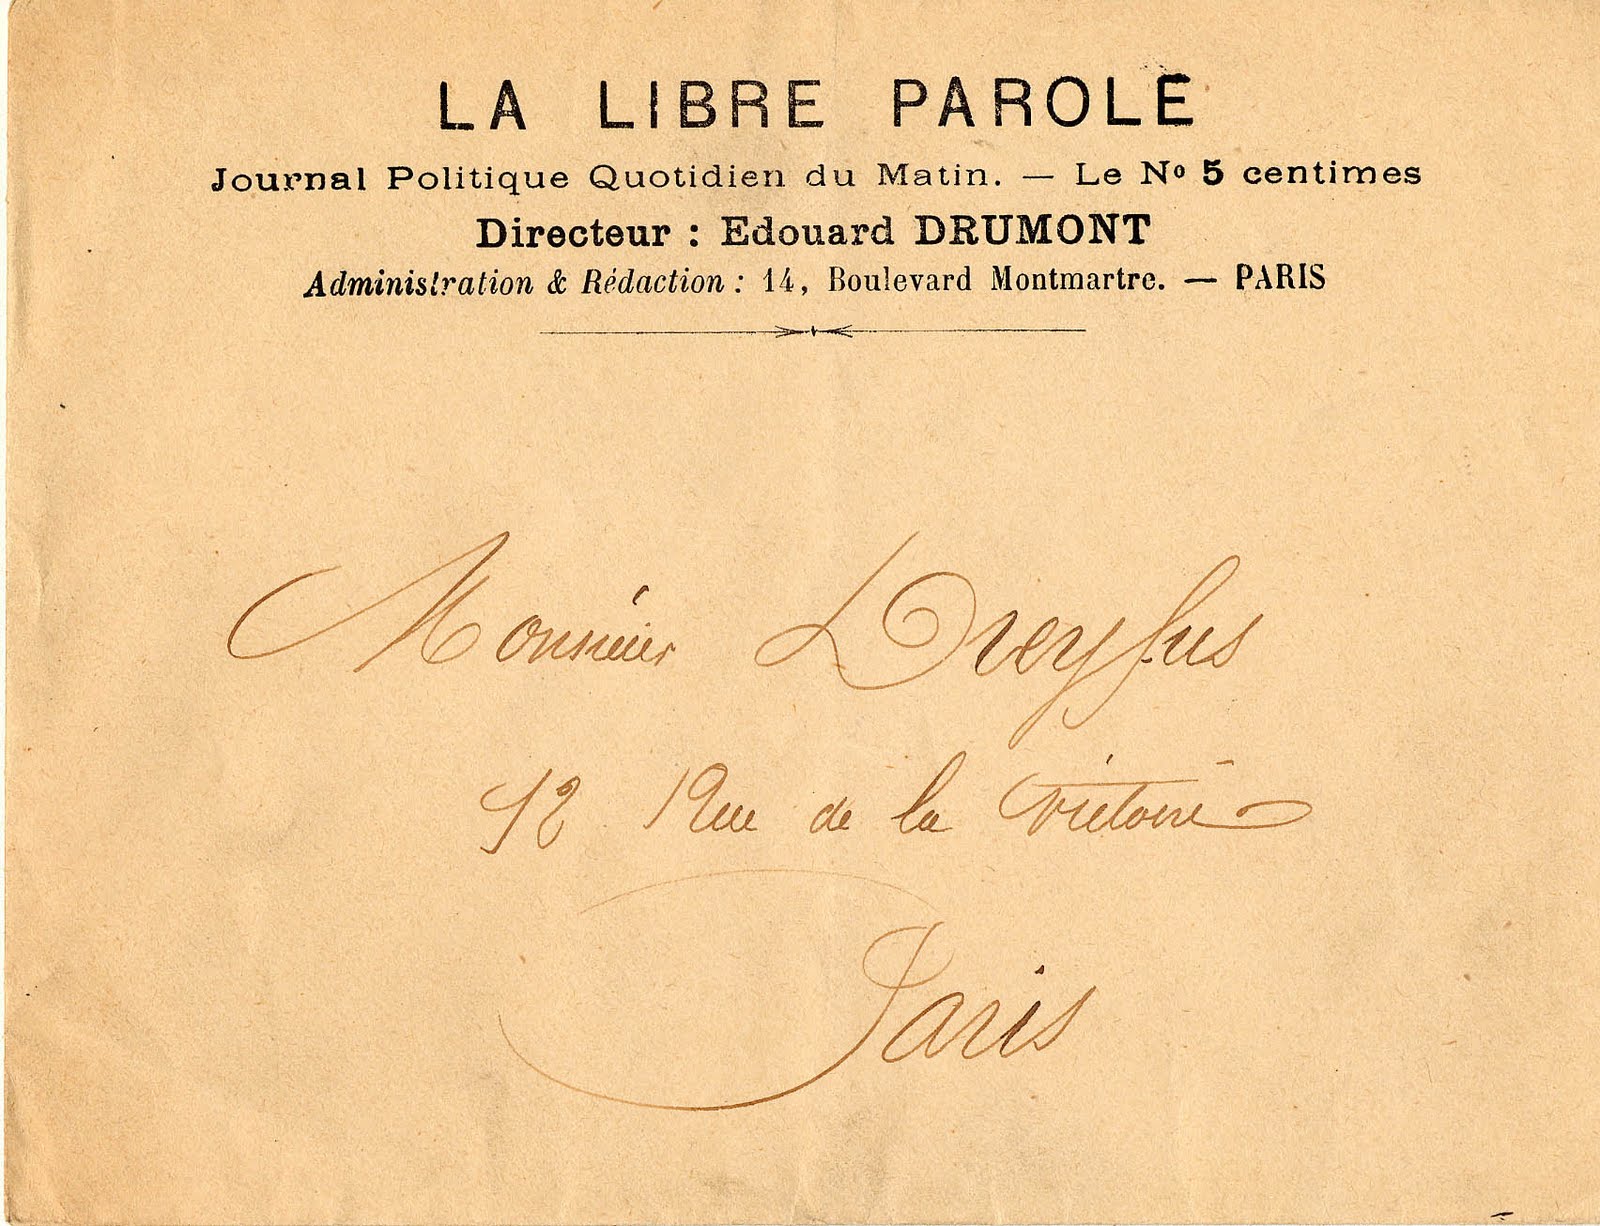  Correspondence addressed to Dreyfus on the letterhead of the anti-Semitic "La Libre Parole"